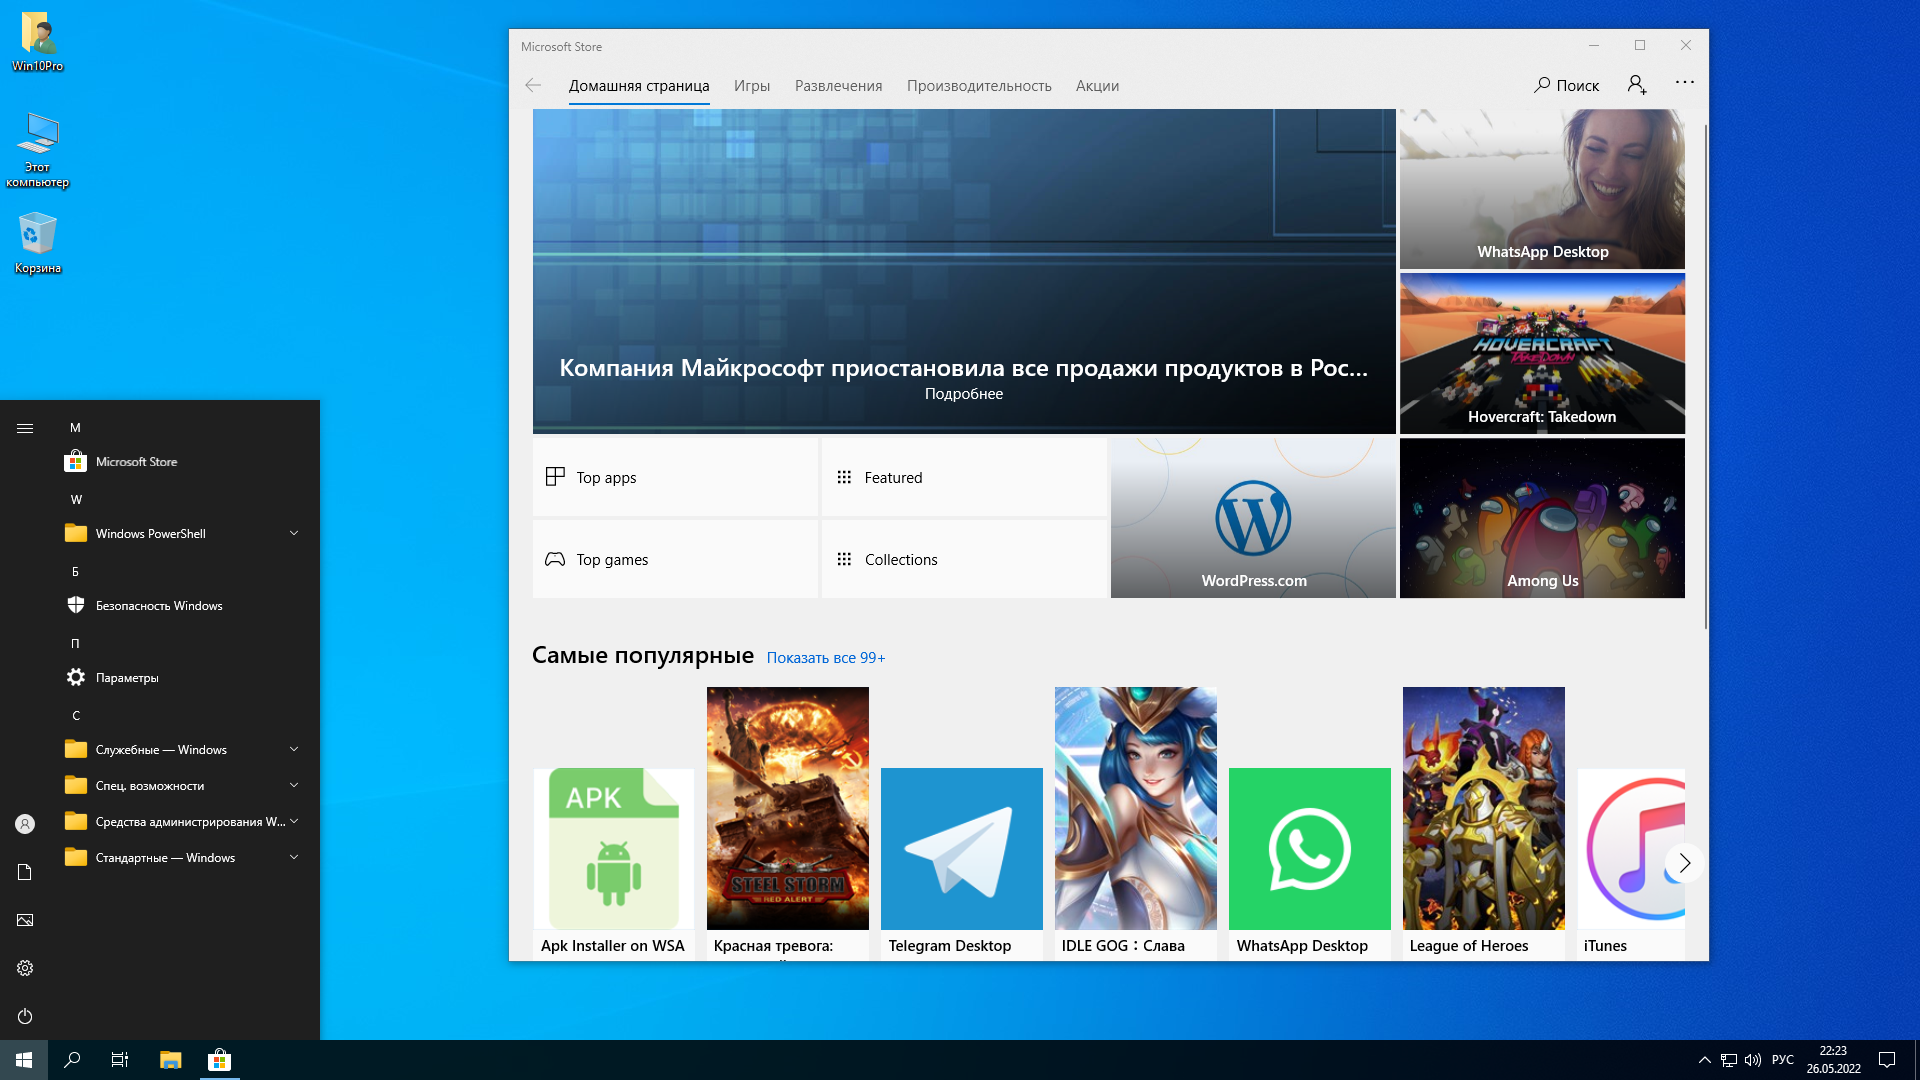 Windows 10 Pro 21H2 19044.1706 x64 ru by SanLex [Universal] [Ru] (2022.05.26)